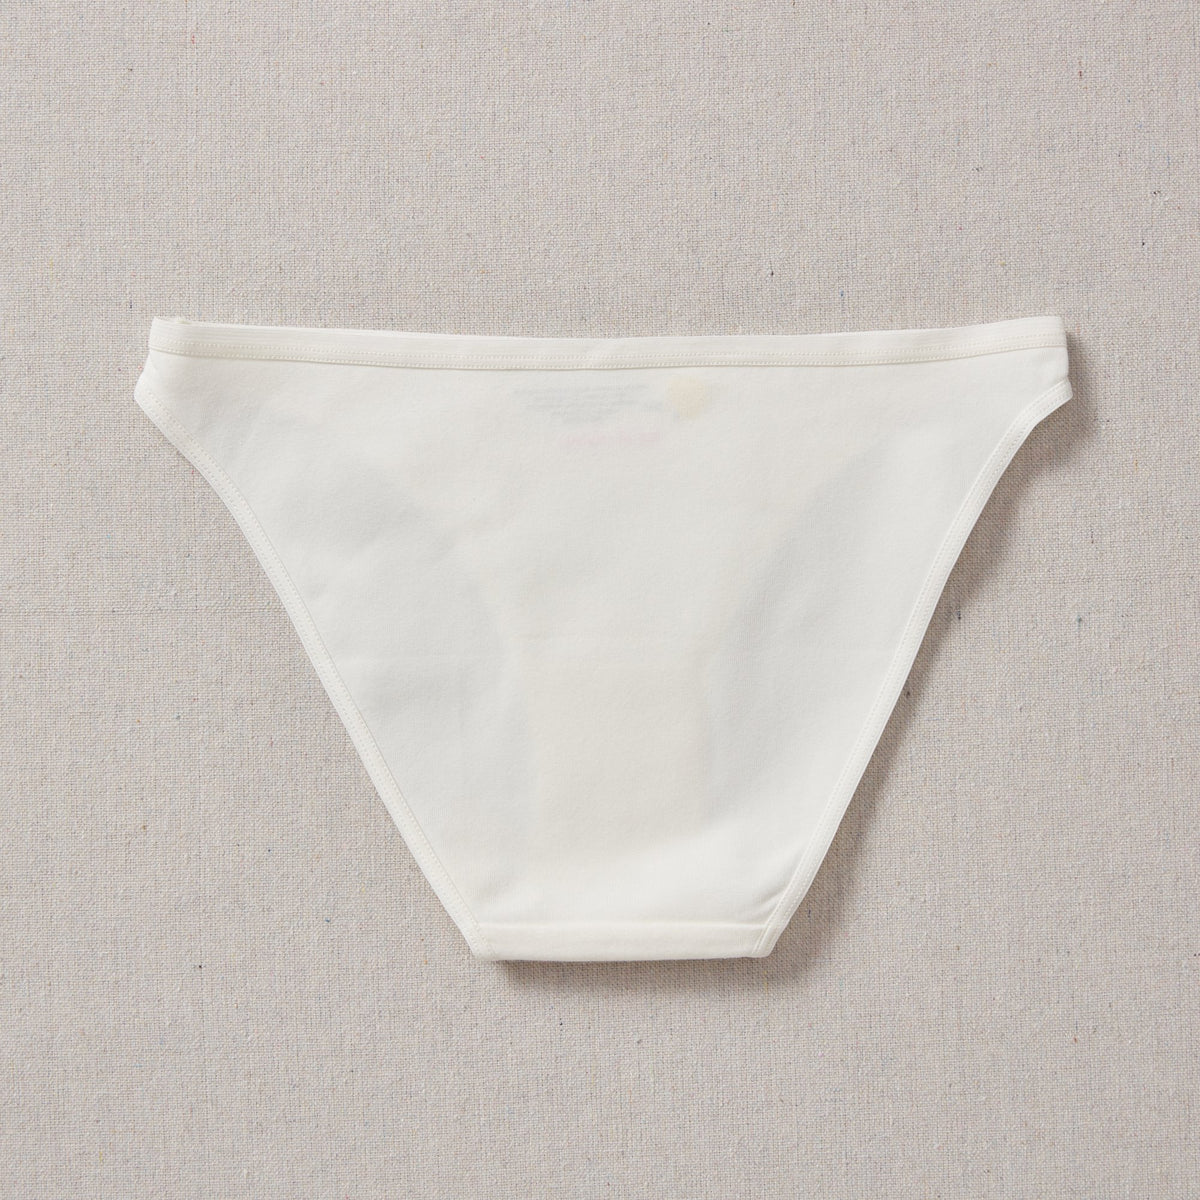 Petal Pima Cotton Underwear